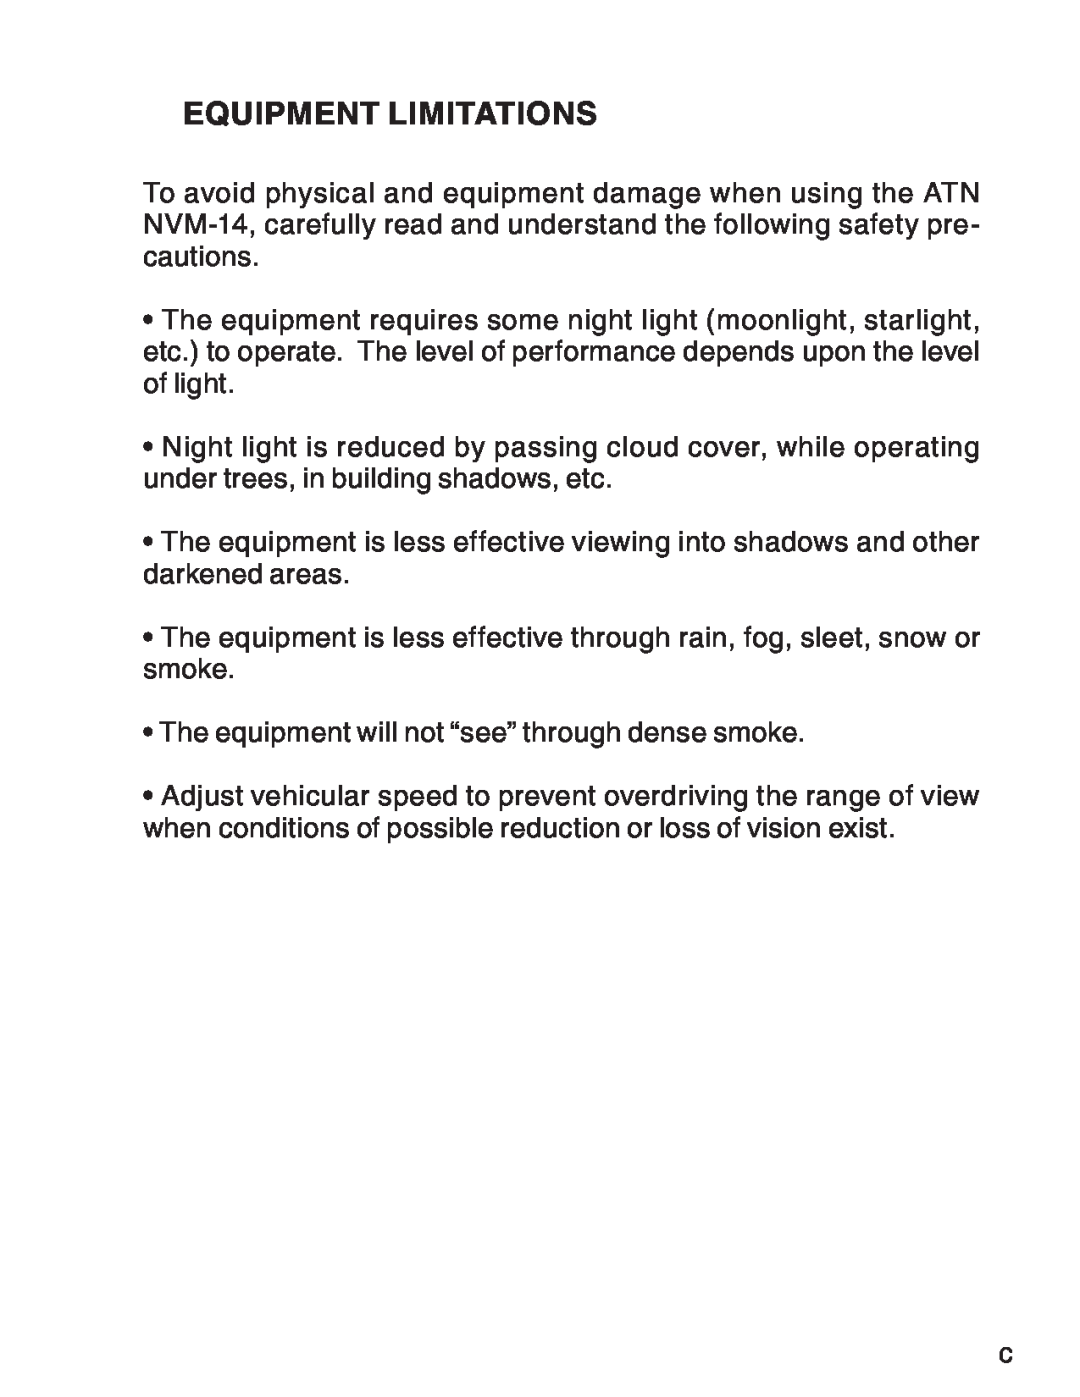 ATN 3 manual Equipment Limitations 